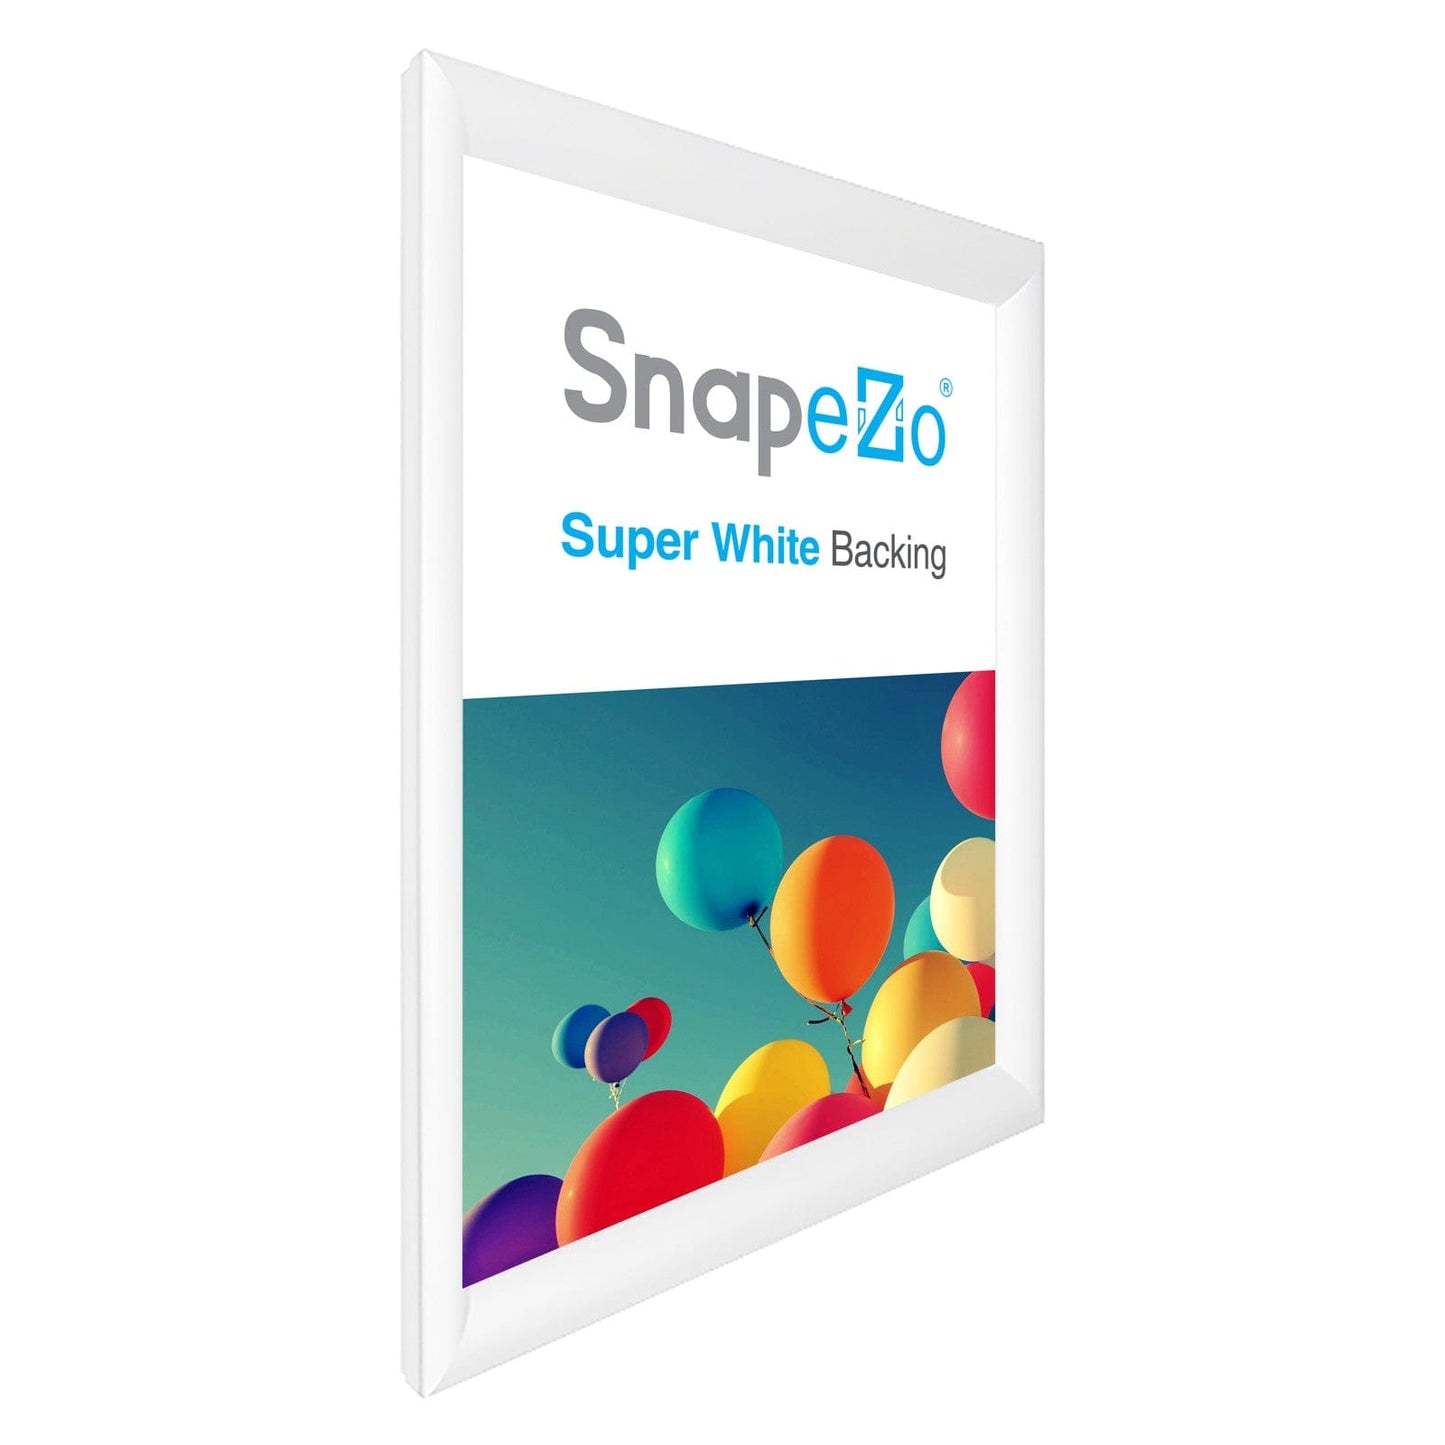 25x35 White SnapeZo® Snap Frame - 1.2" Profile - Snap Frames Direct